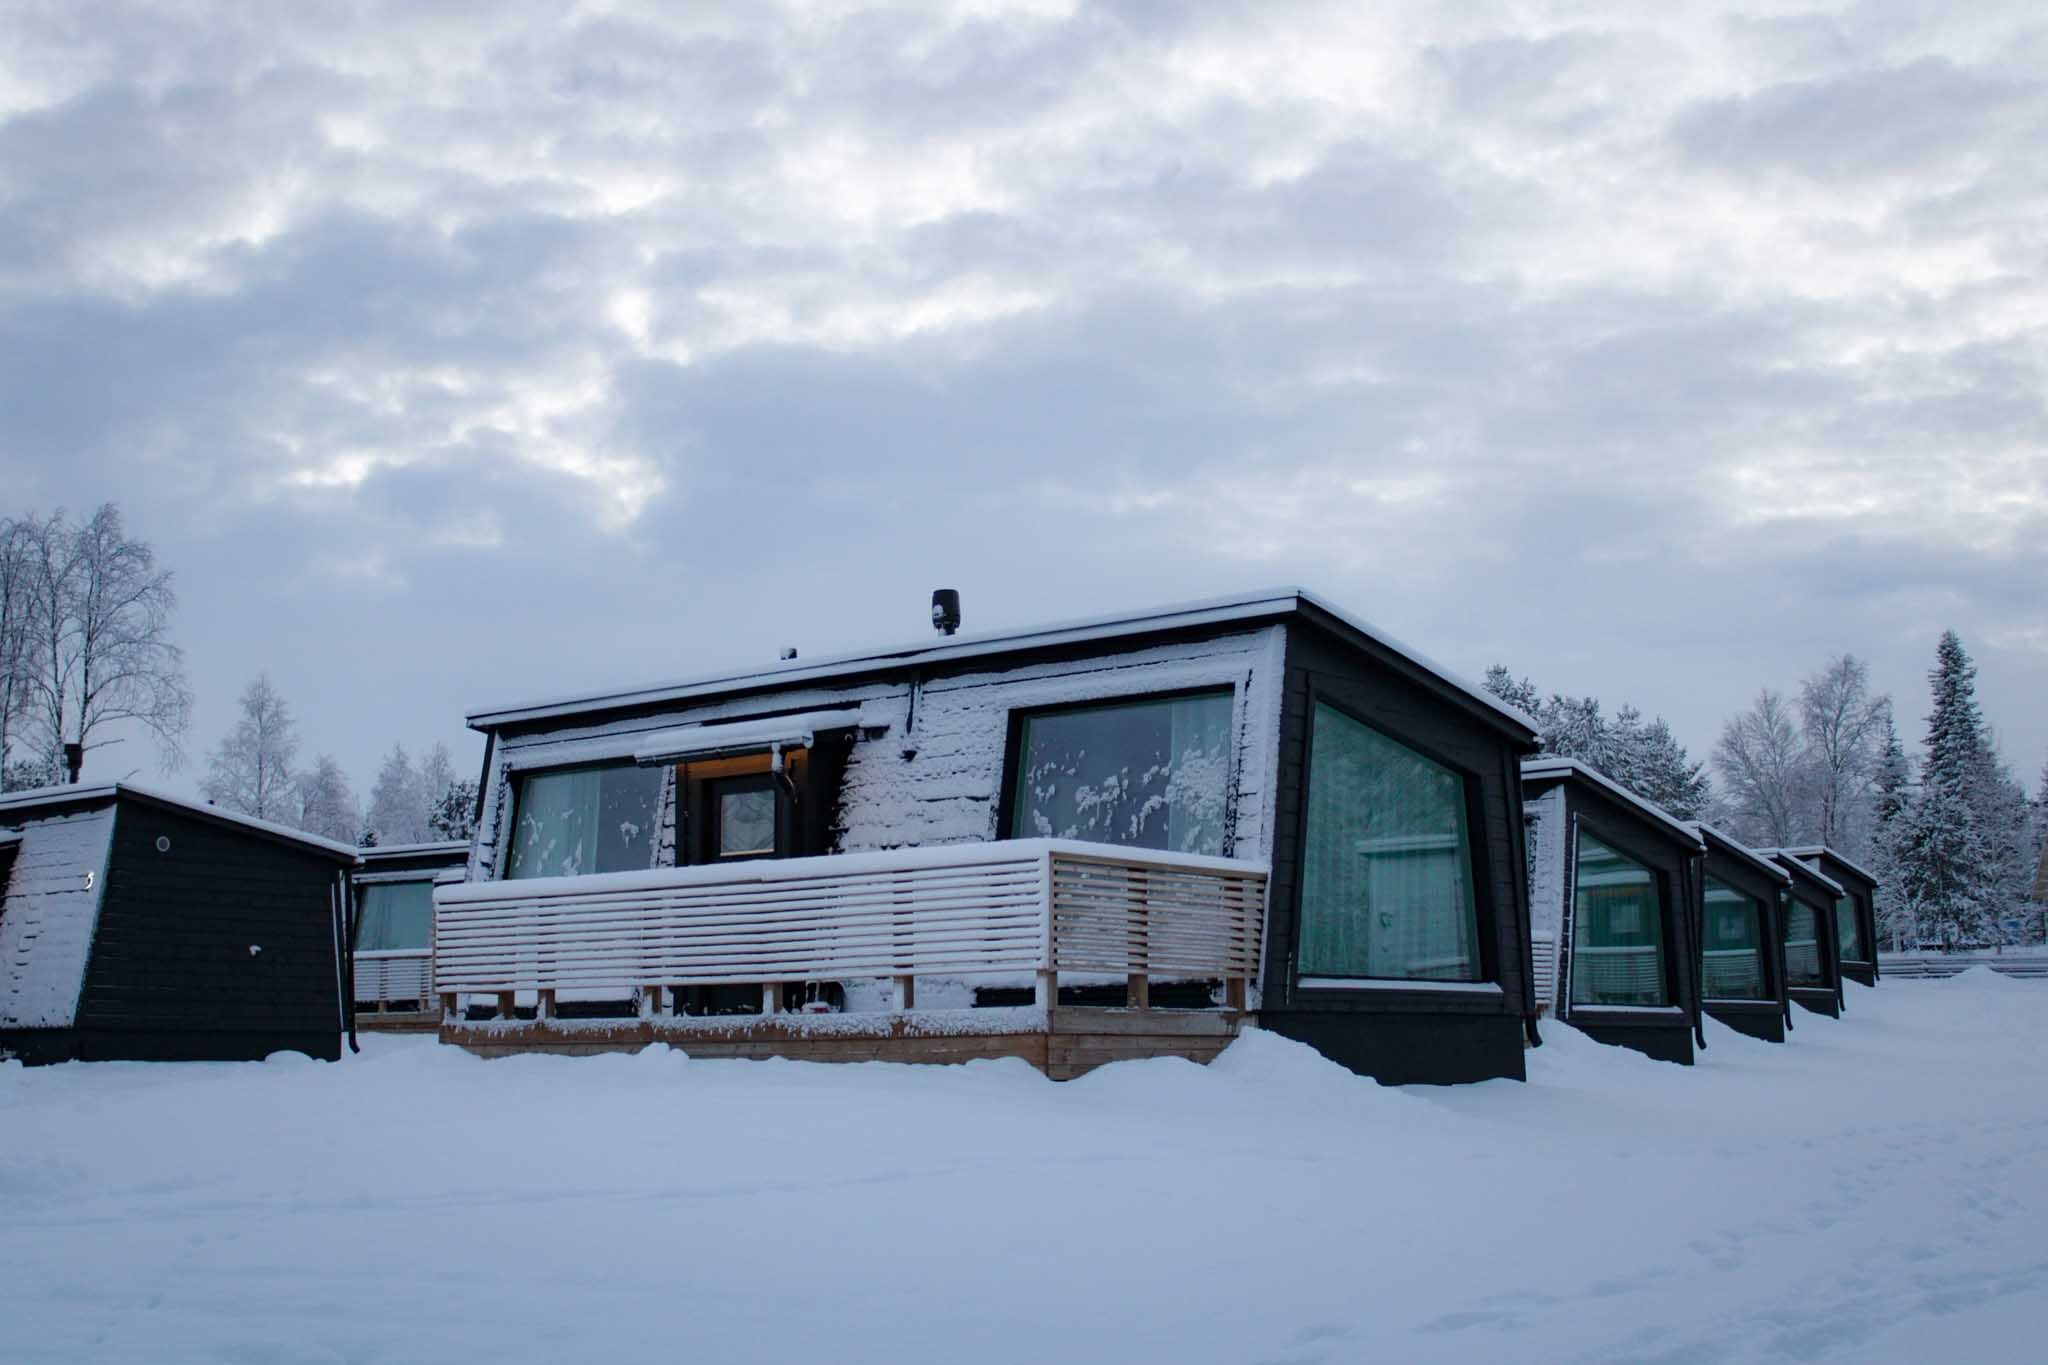 Inari Sauna Suite during winter in Inari Holiday Village, Lapland Finland.